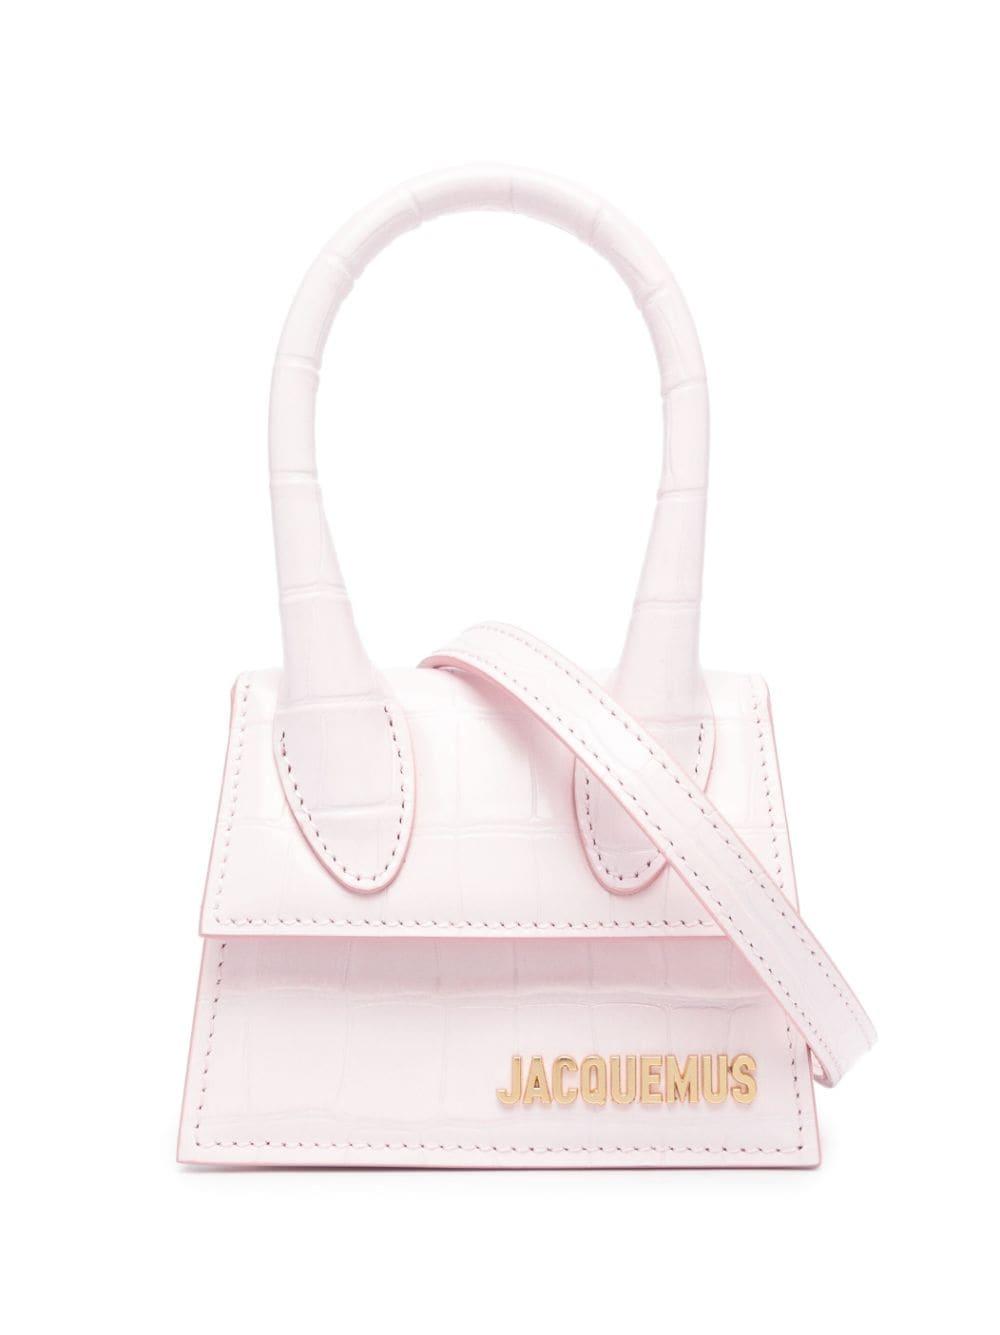 Jacquemus Le Chiquito Mini Bag in Pink